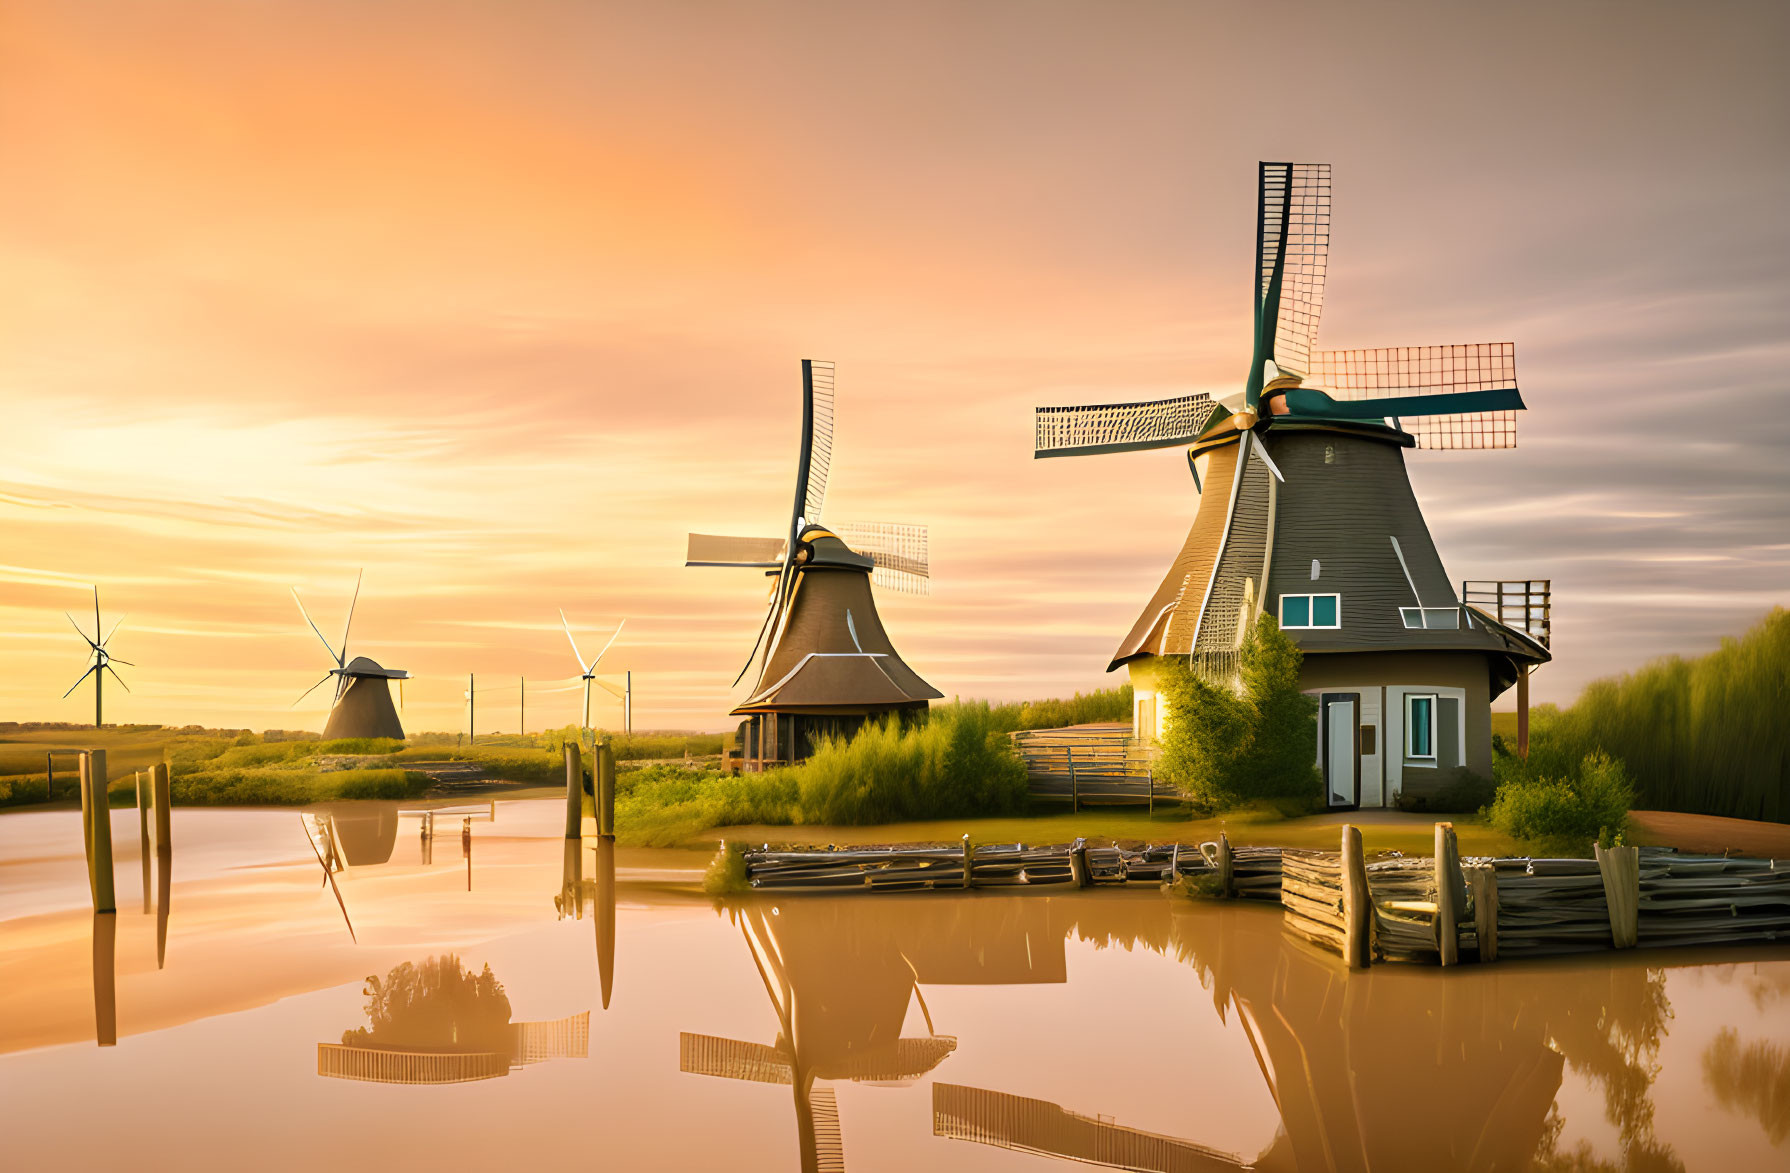 Dutch windmills by calm waterway at sunset